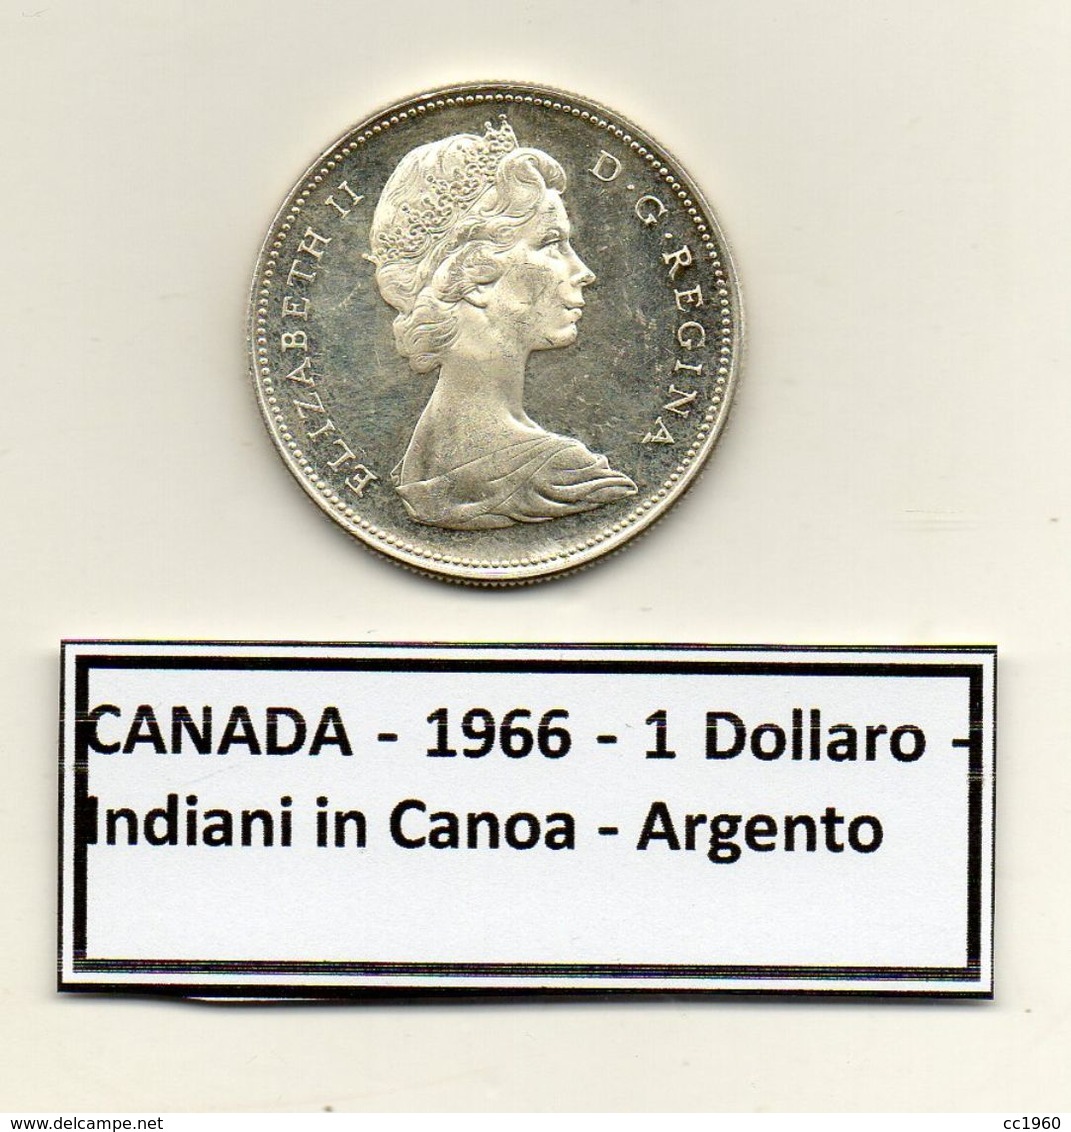 Canada - 1966 - 1 Dollaro - Indiani In Canoa - Argento - (MW1214) - Canada